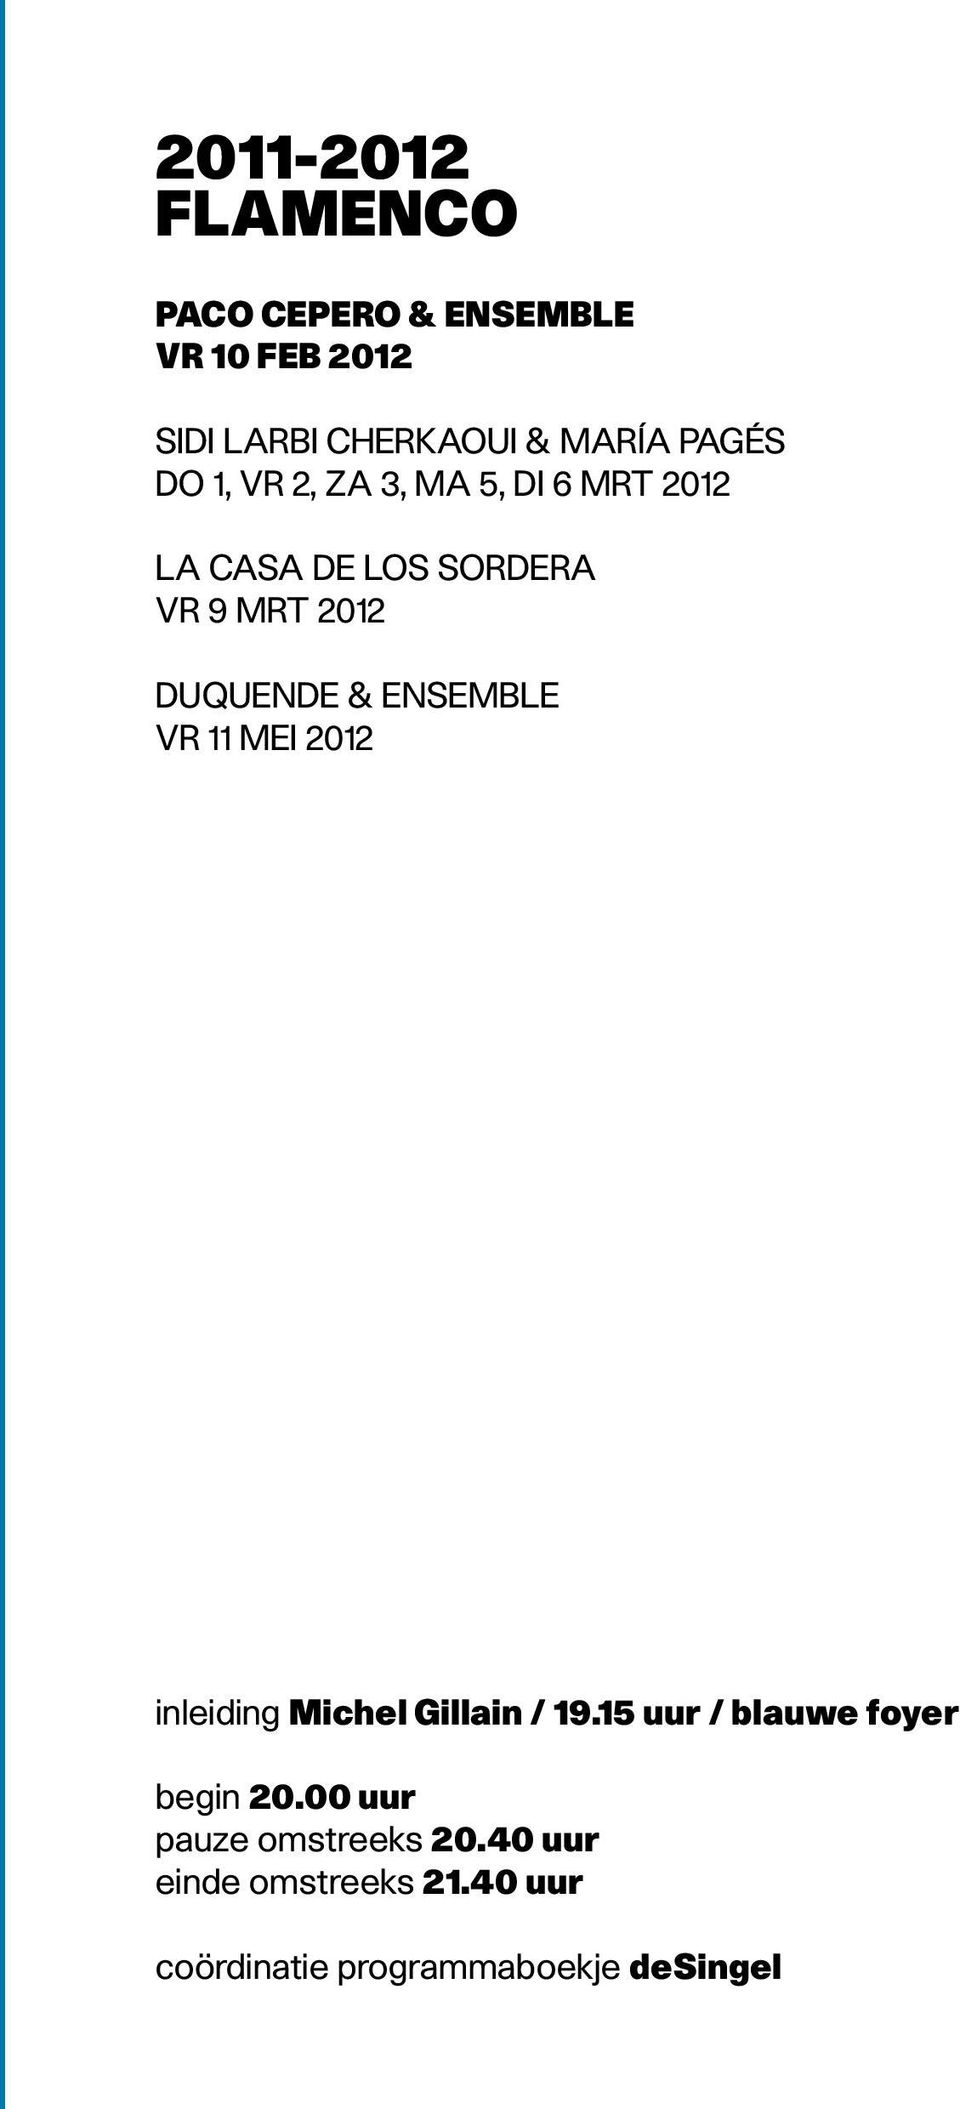 & ensemble vr 11 mei 2012 inleiding Michel Gillain / 19.15 uur / blauwe foyer begin 20.